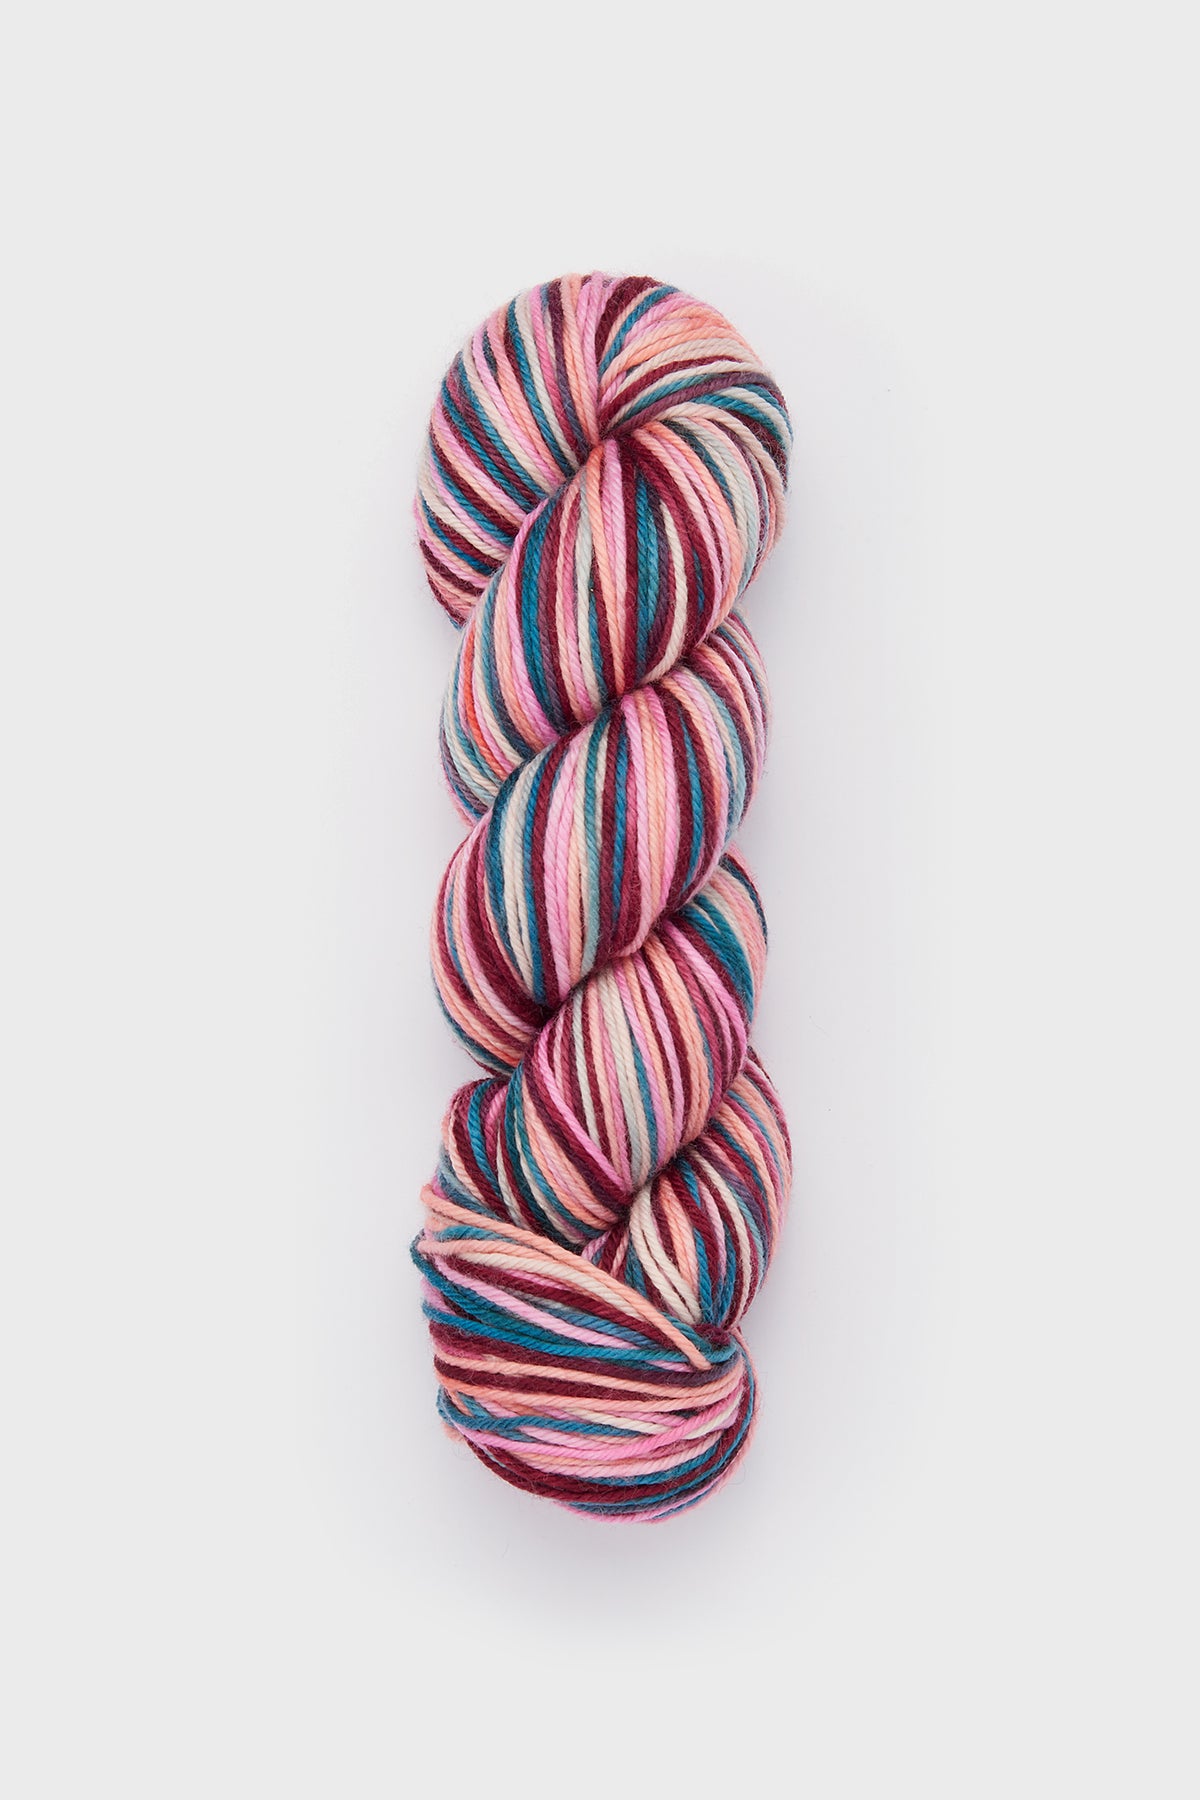 Yarn Skein - Cotton Candy Space Dye